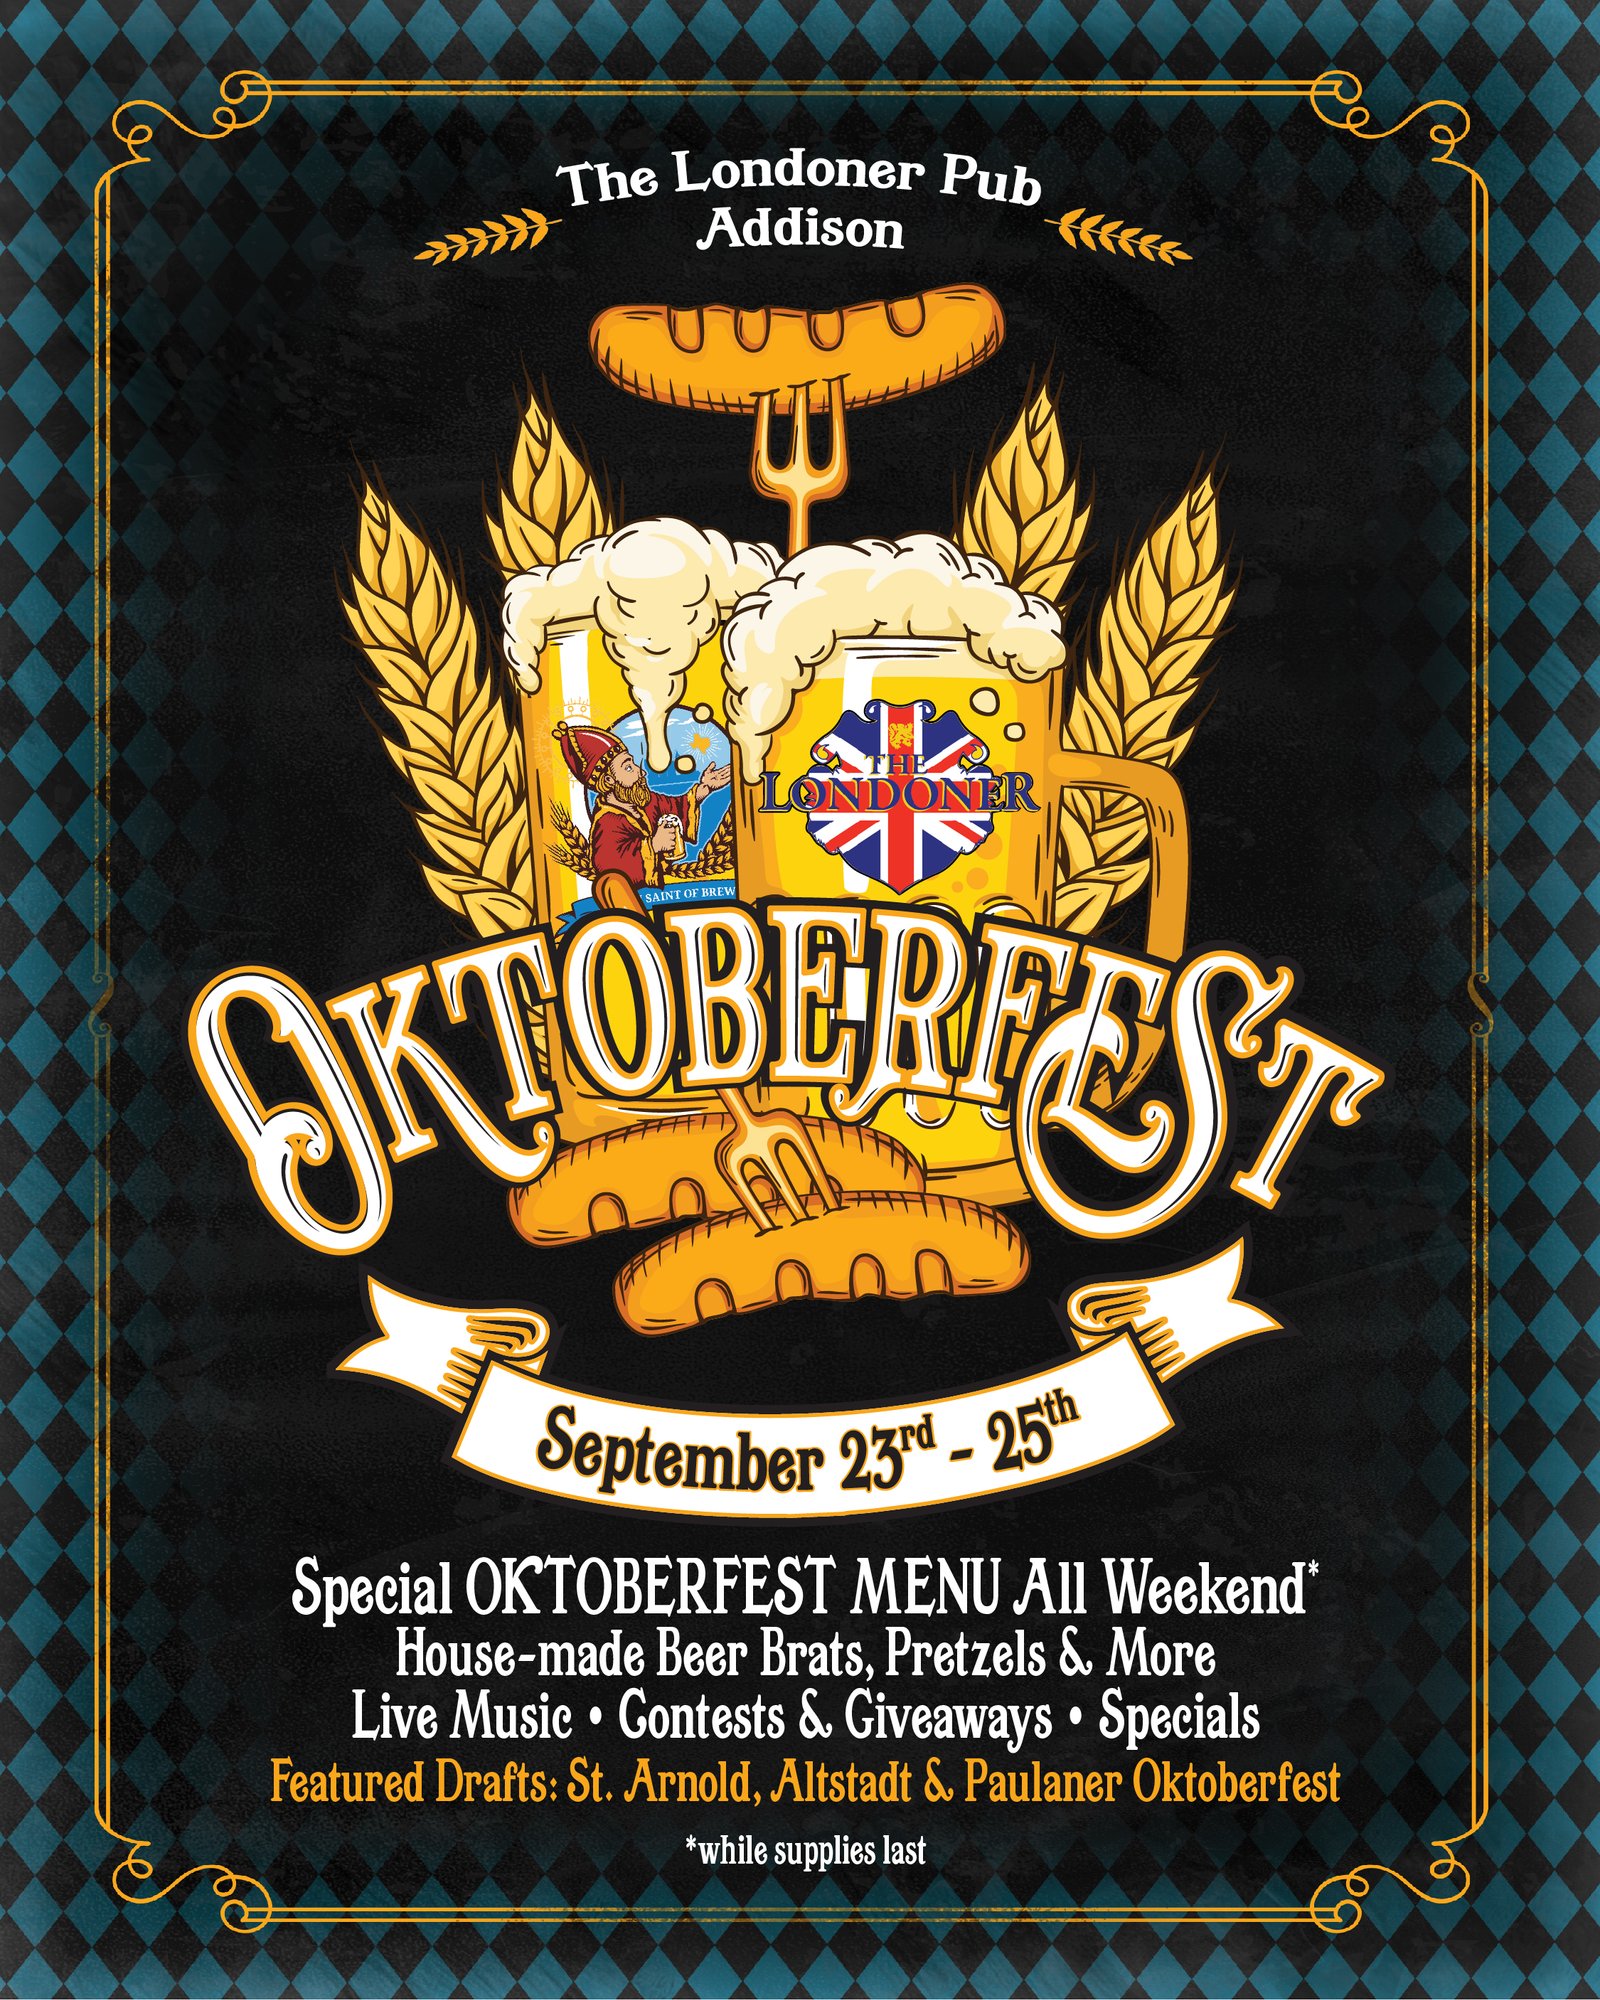 The Londoner Pub Oktoberfest 2022 promotion